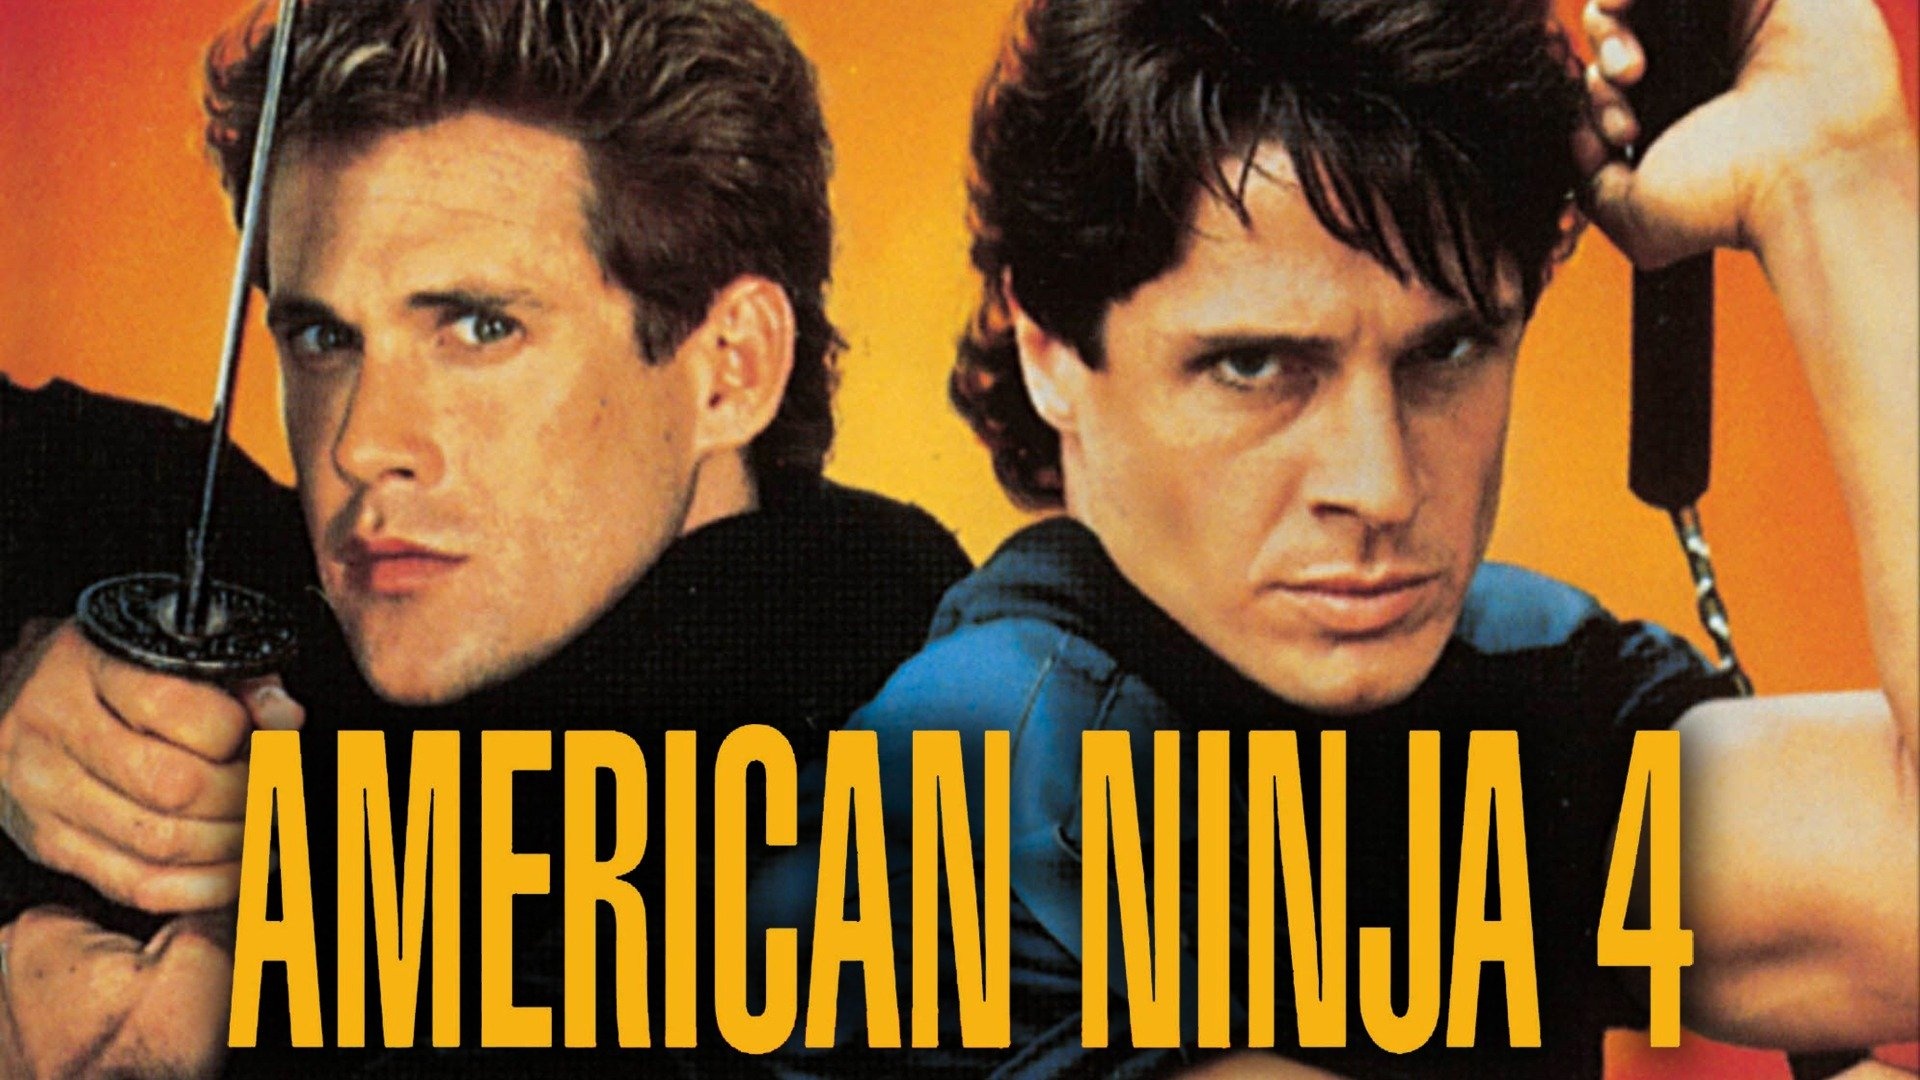 American Ninja 4, Online movie streaming, 1990's action, Full movie, 1920x1080 Full HD Desktop